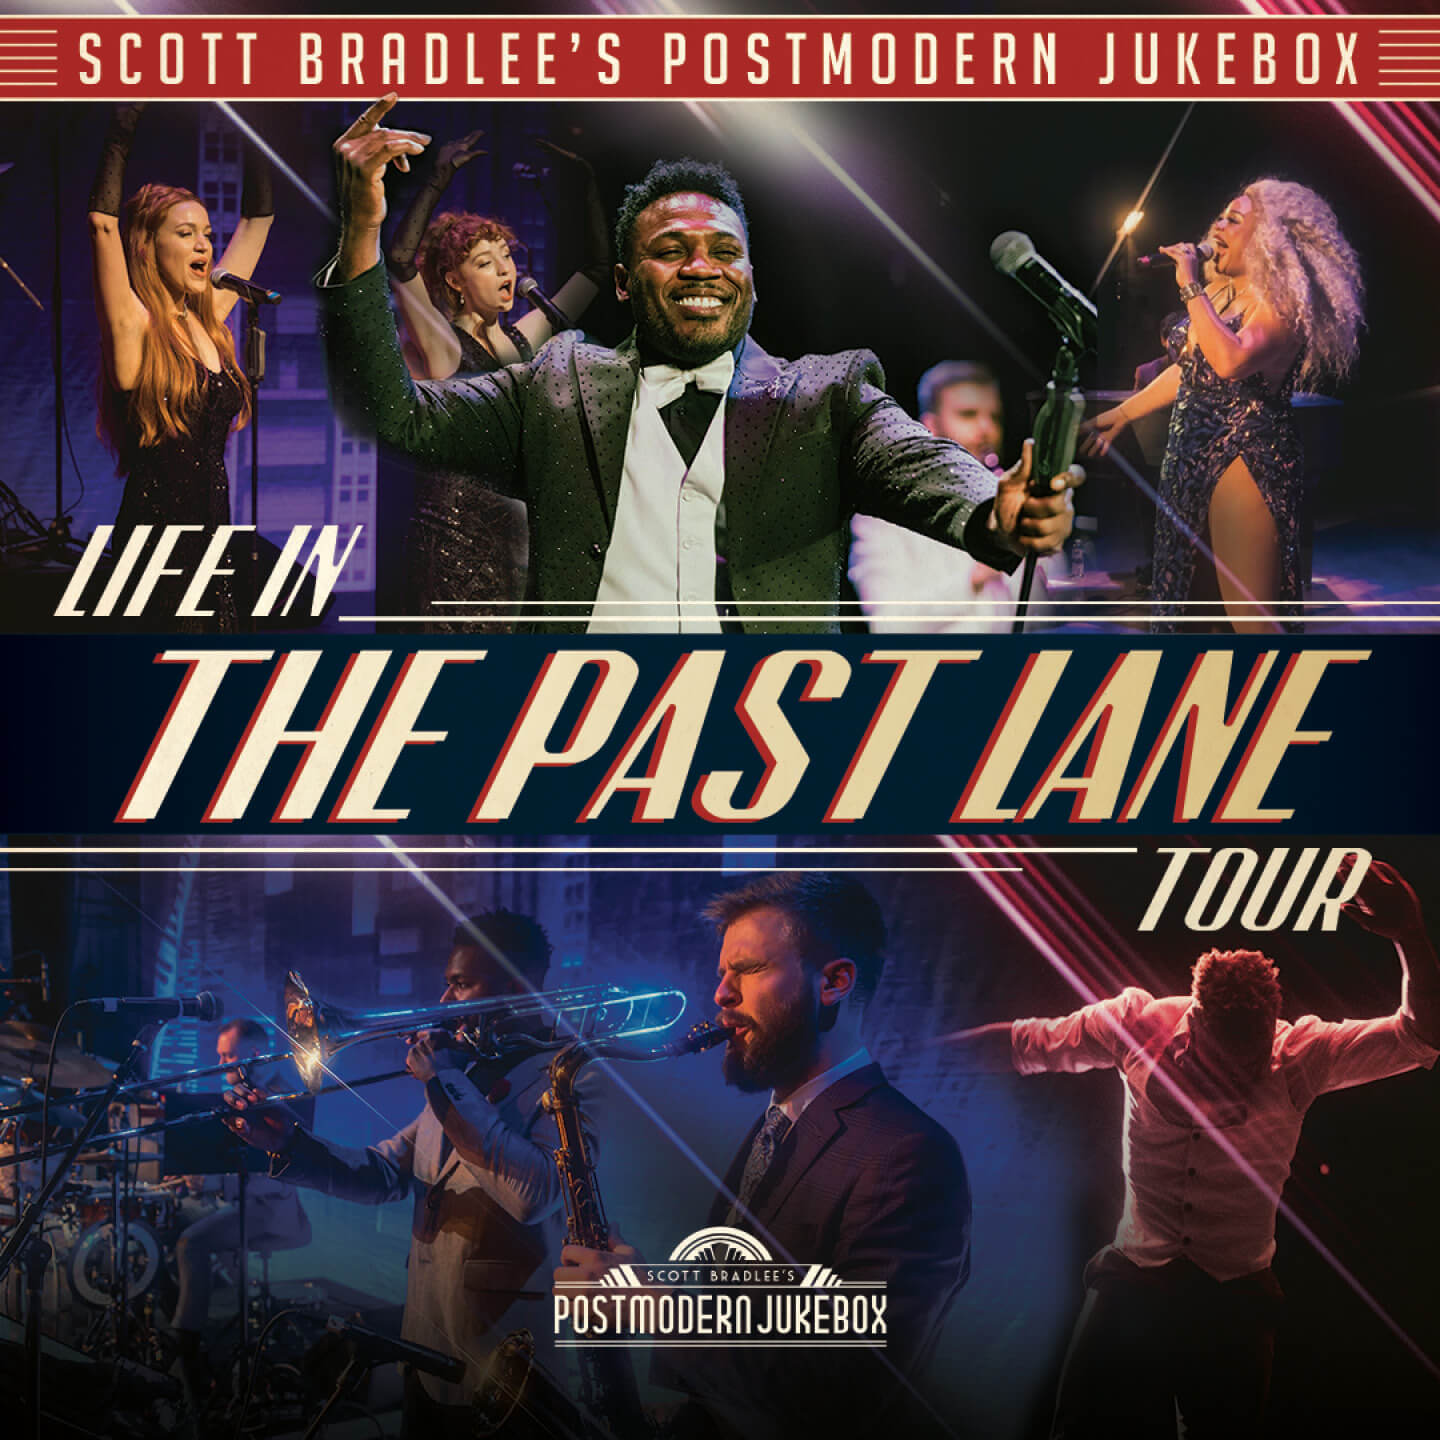 Scott Bradlee’s Postmodern Jukebox: Life in the Past Lane Tour